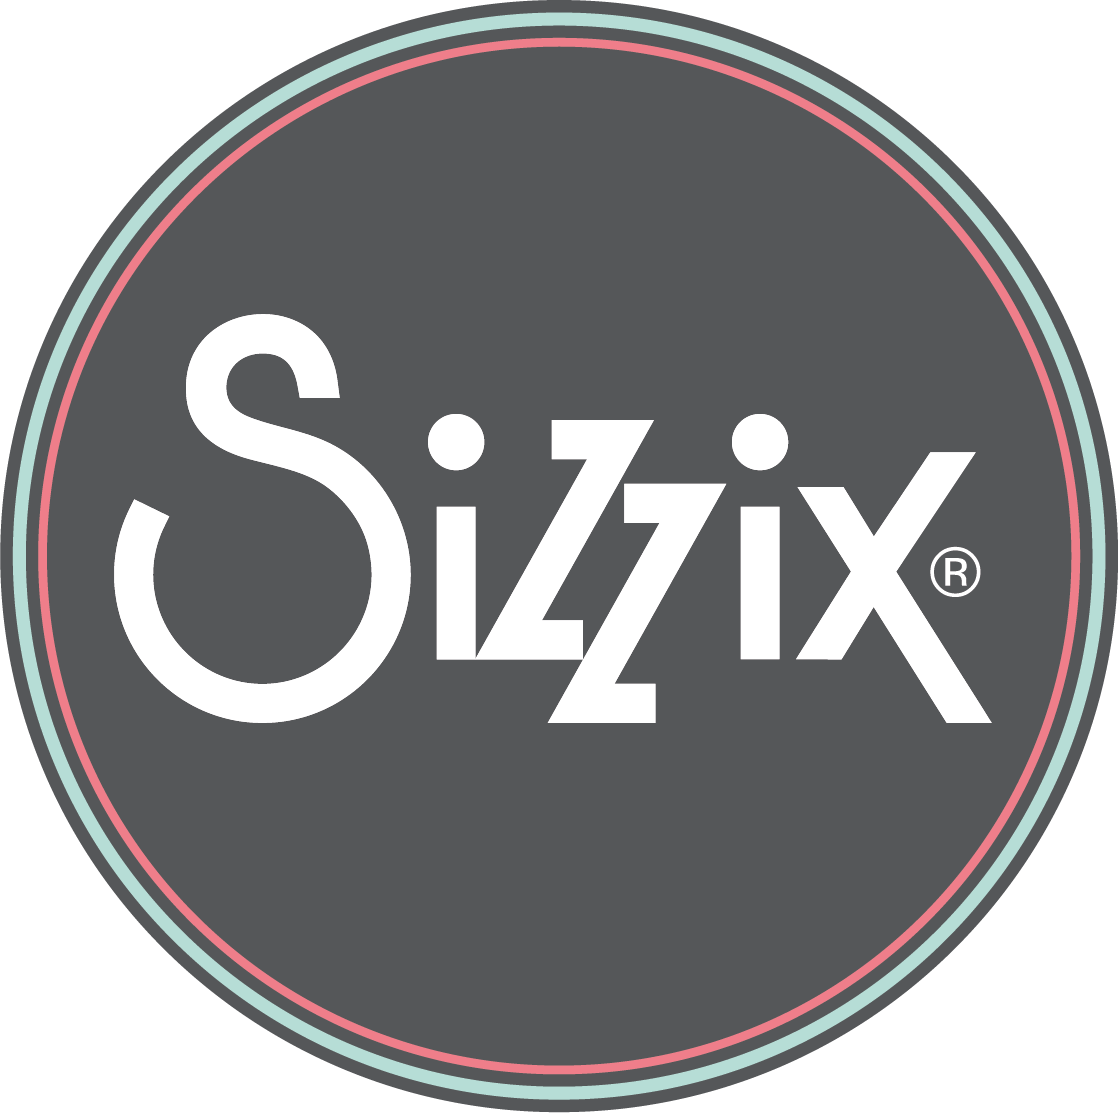 Sizzix Creative Team